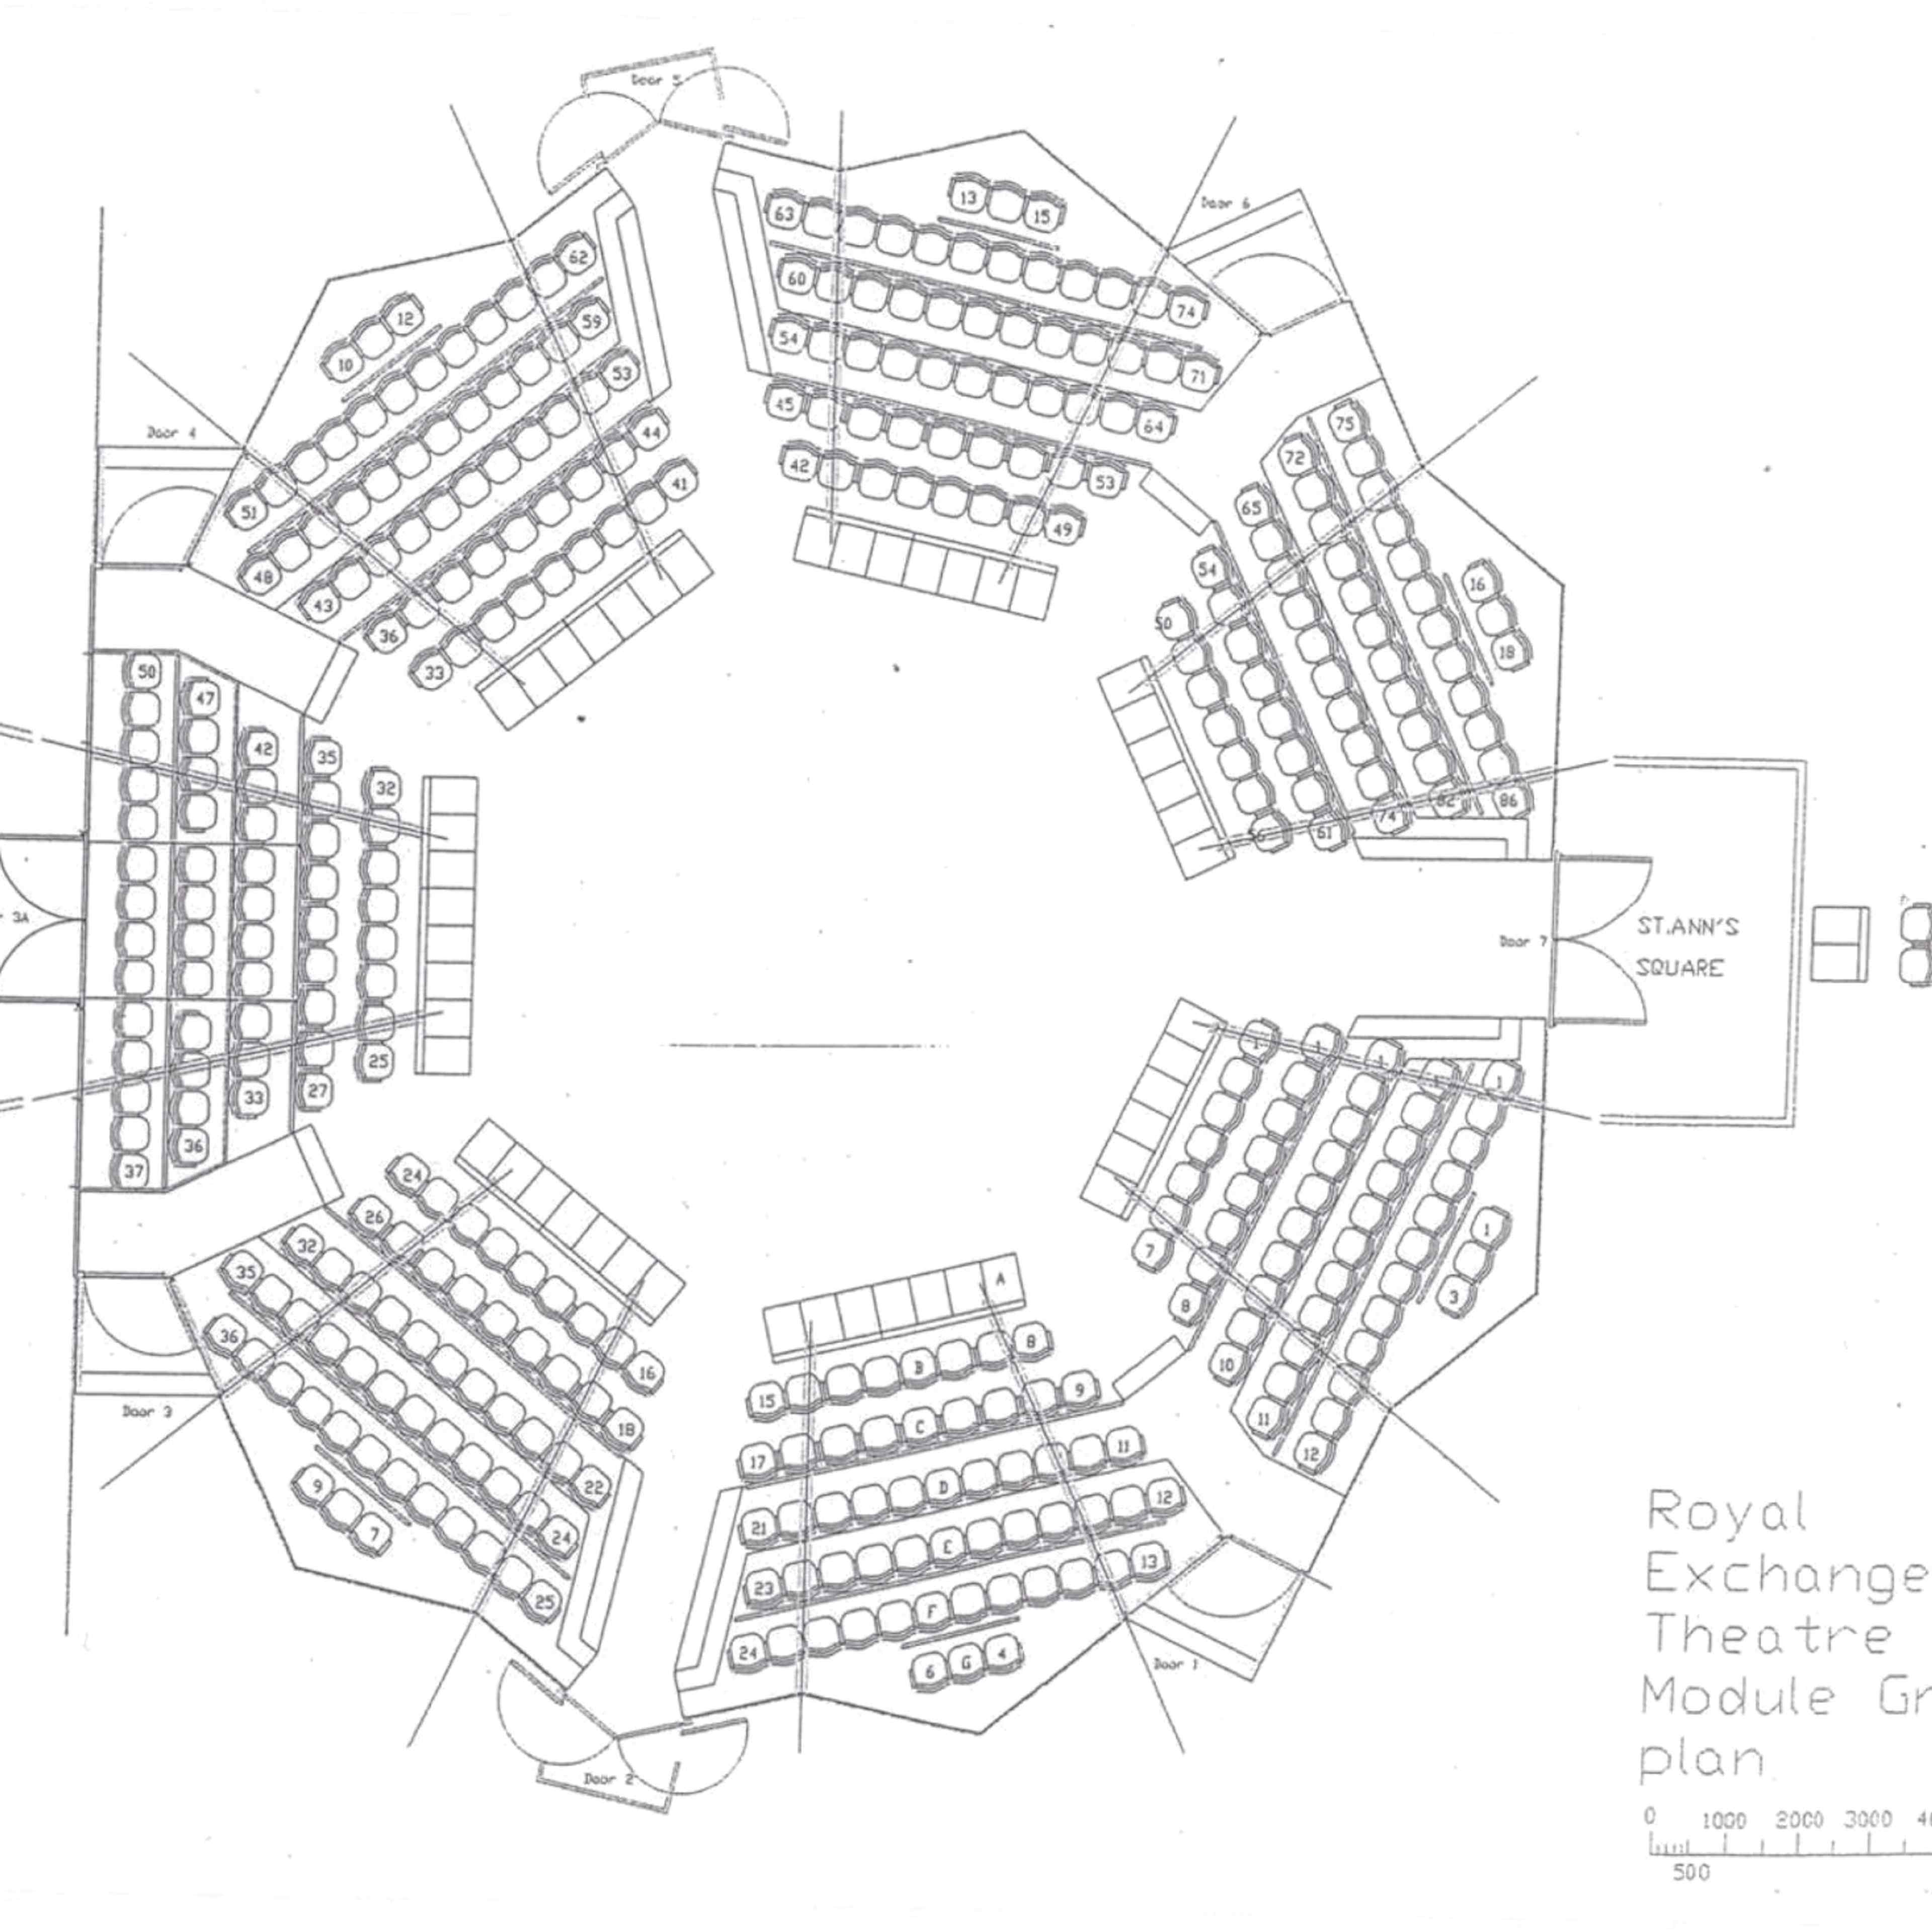 Royal Exchange Theatre - Theatre Module image 2